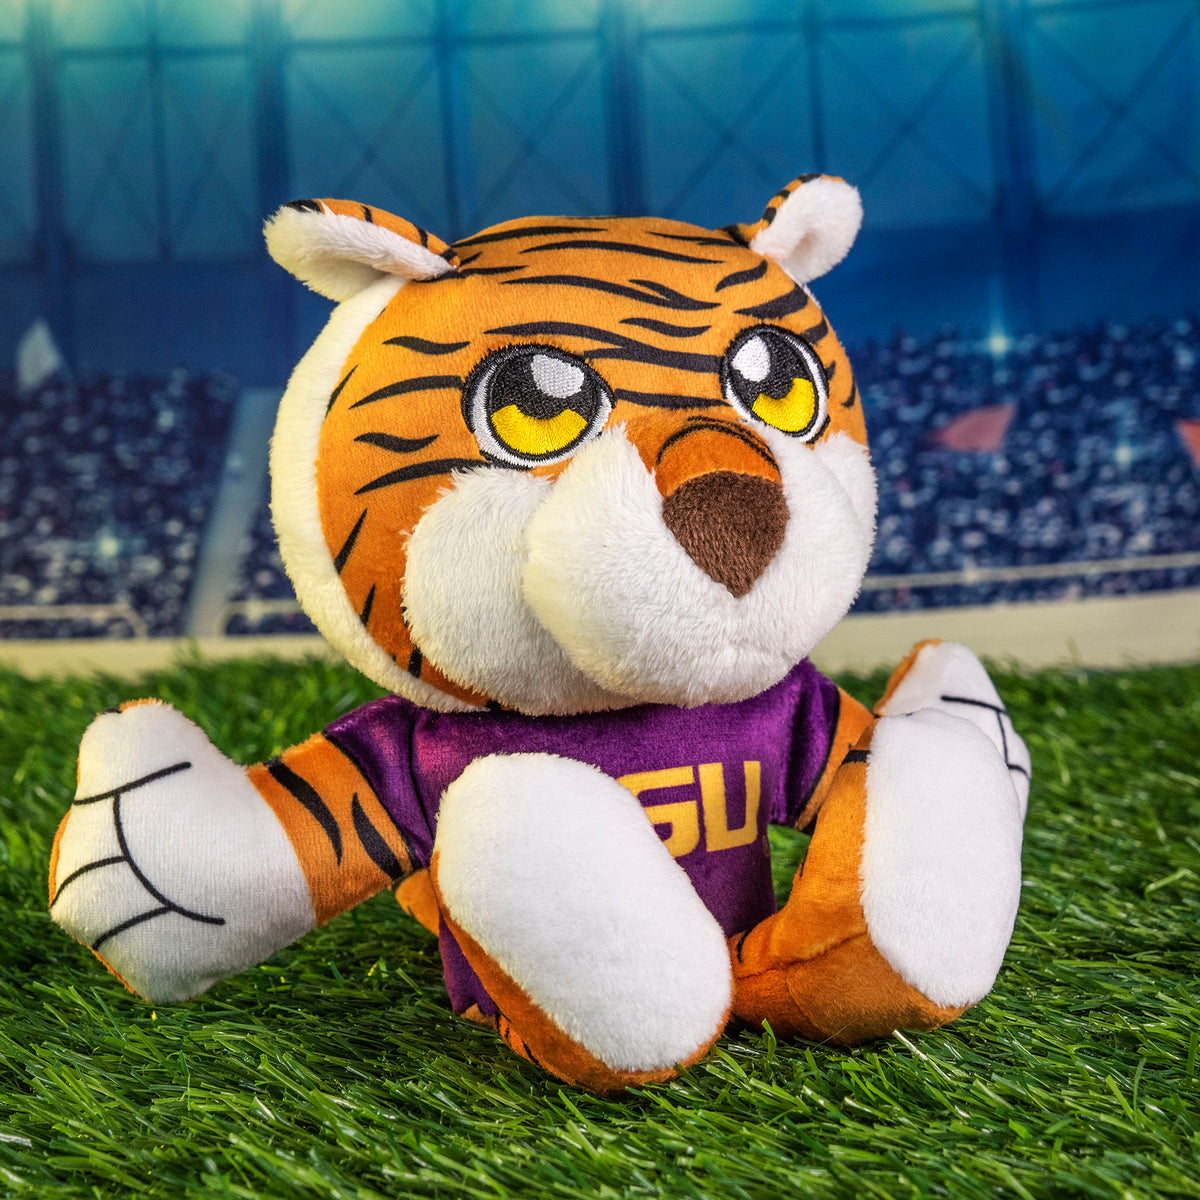 LSU Mike the Tiger 8&quot; Mascot Kuricha Sitting Plush